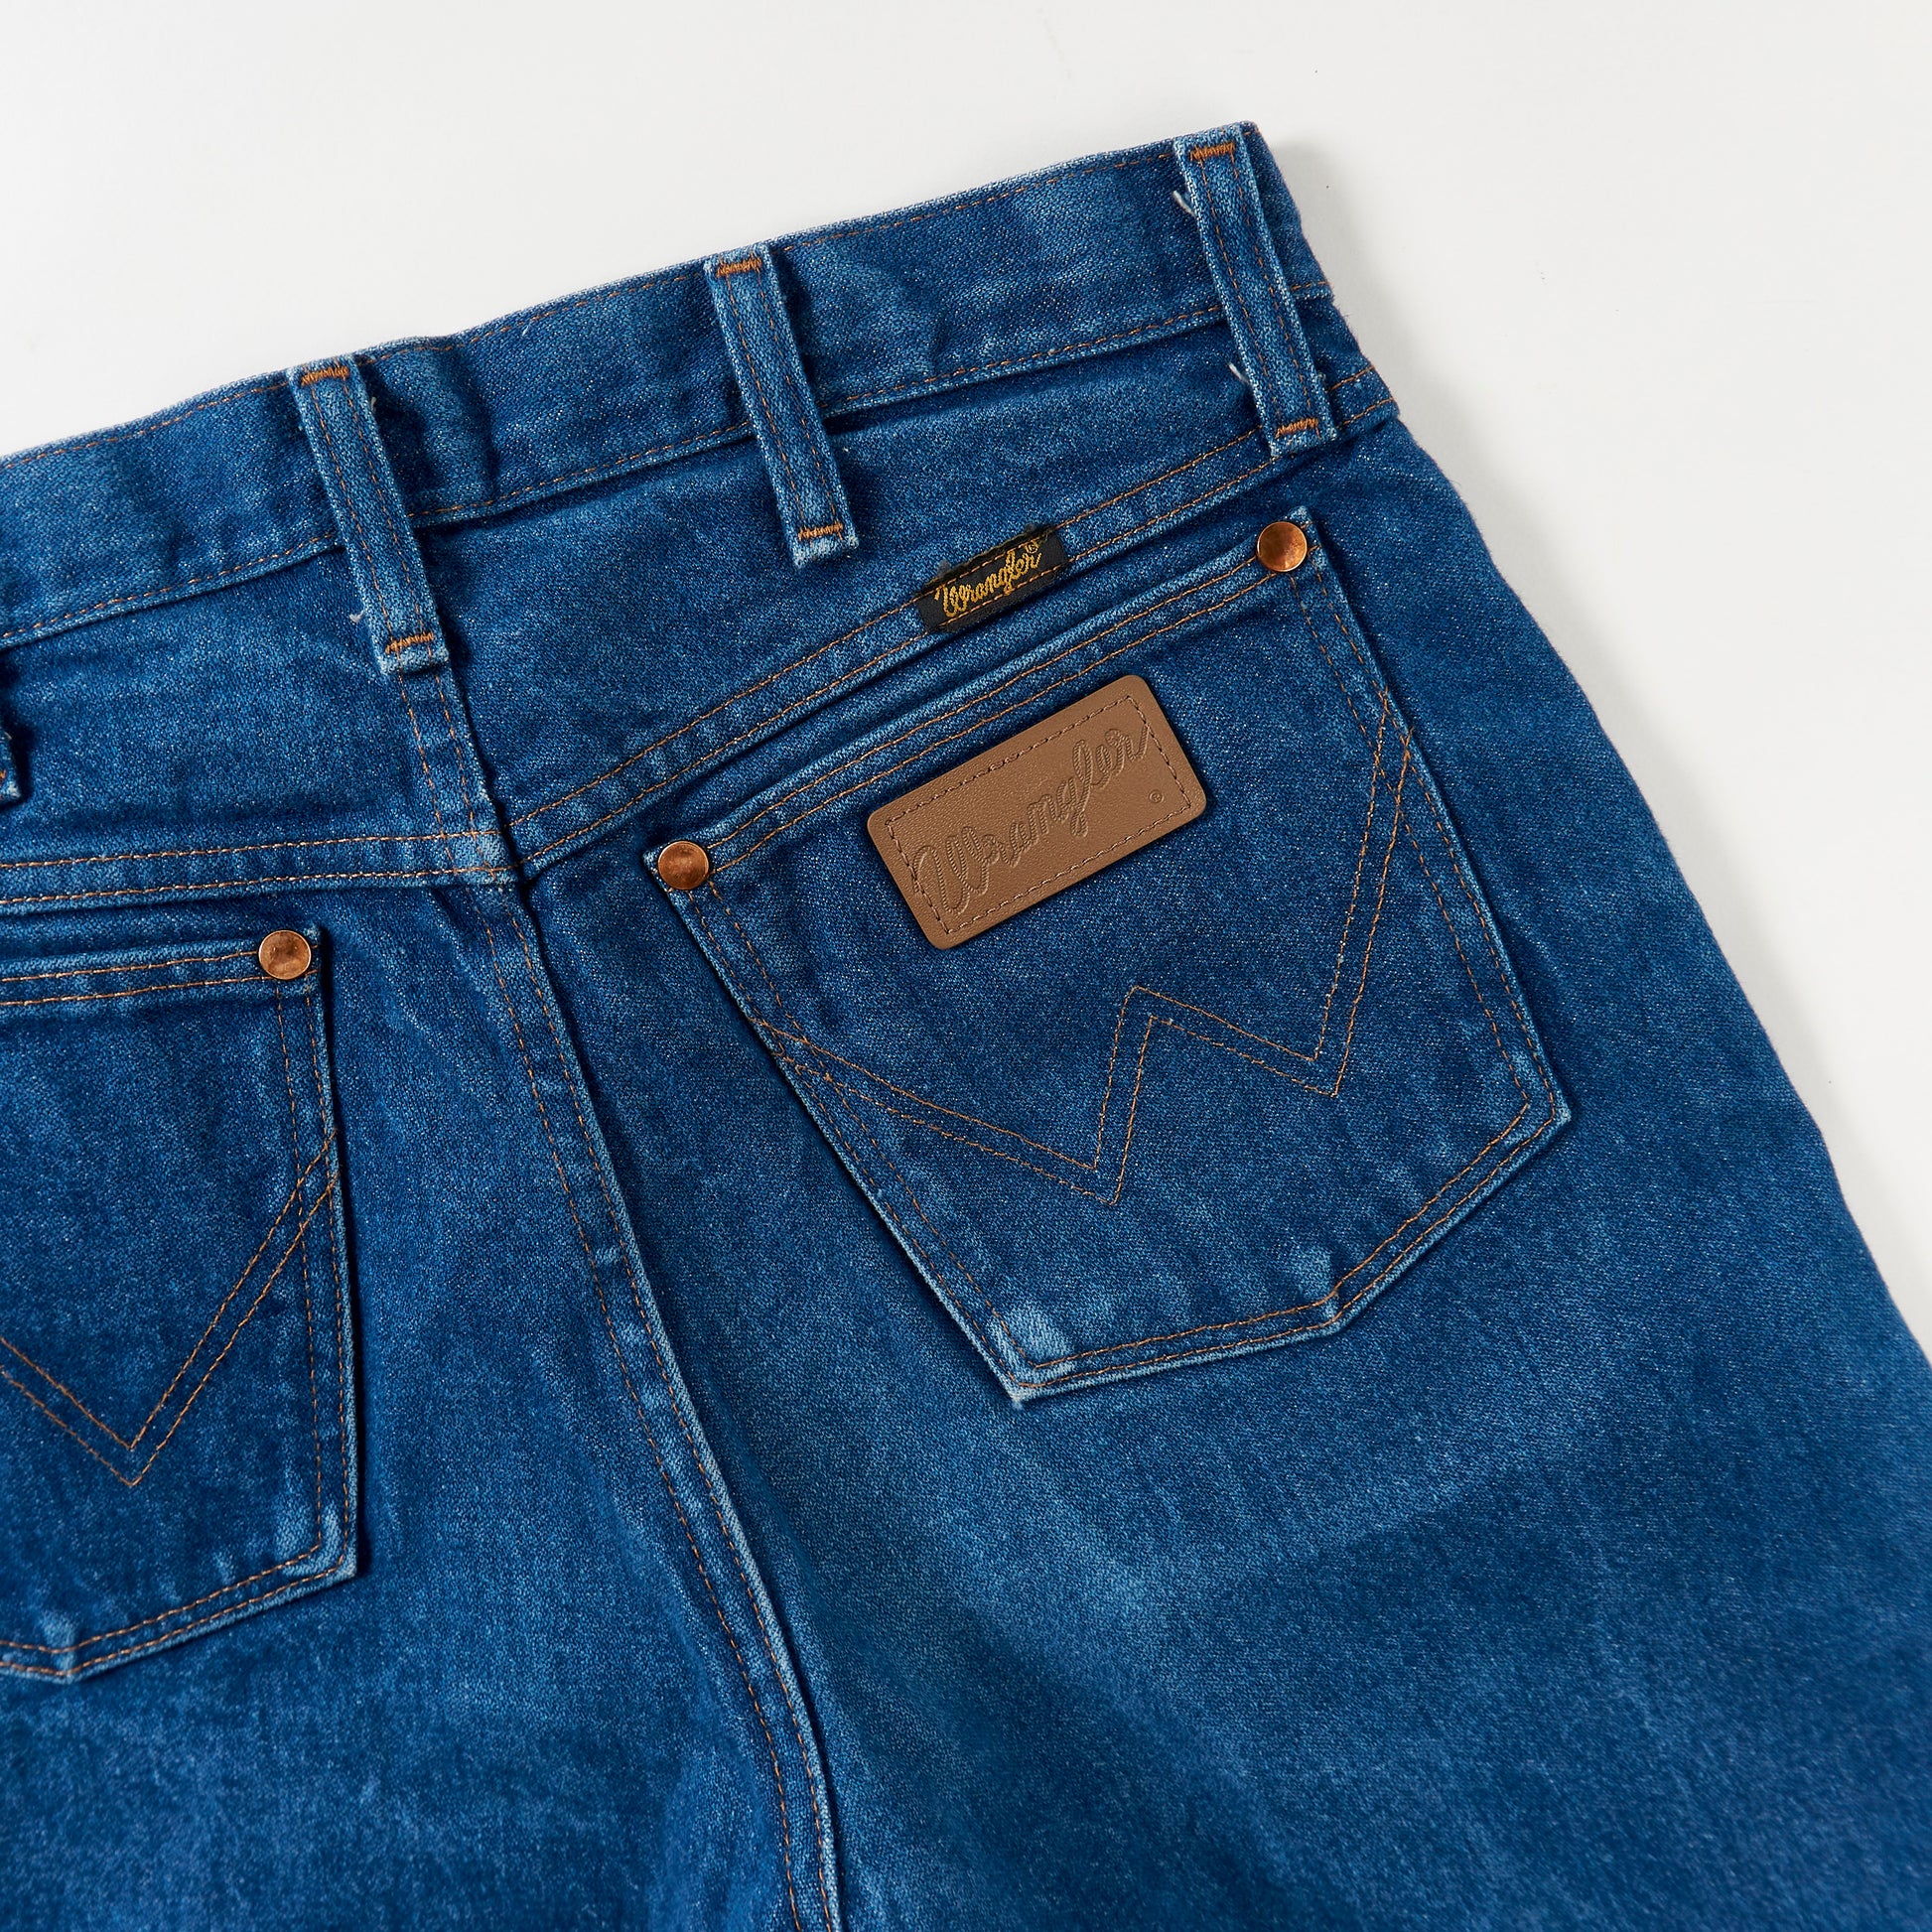 Vintage Wrangler Jeans – Stax